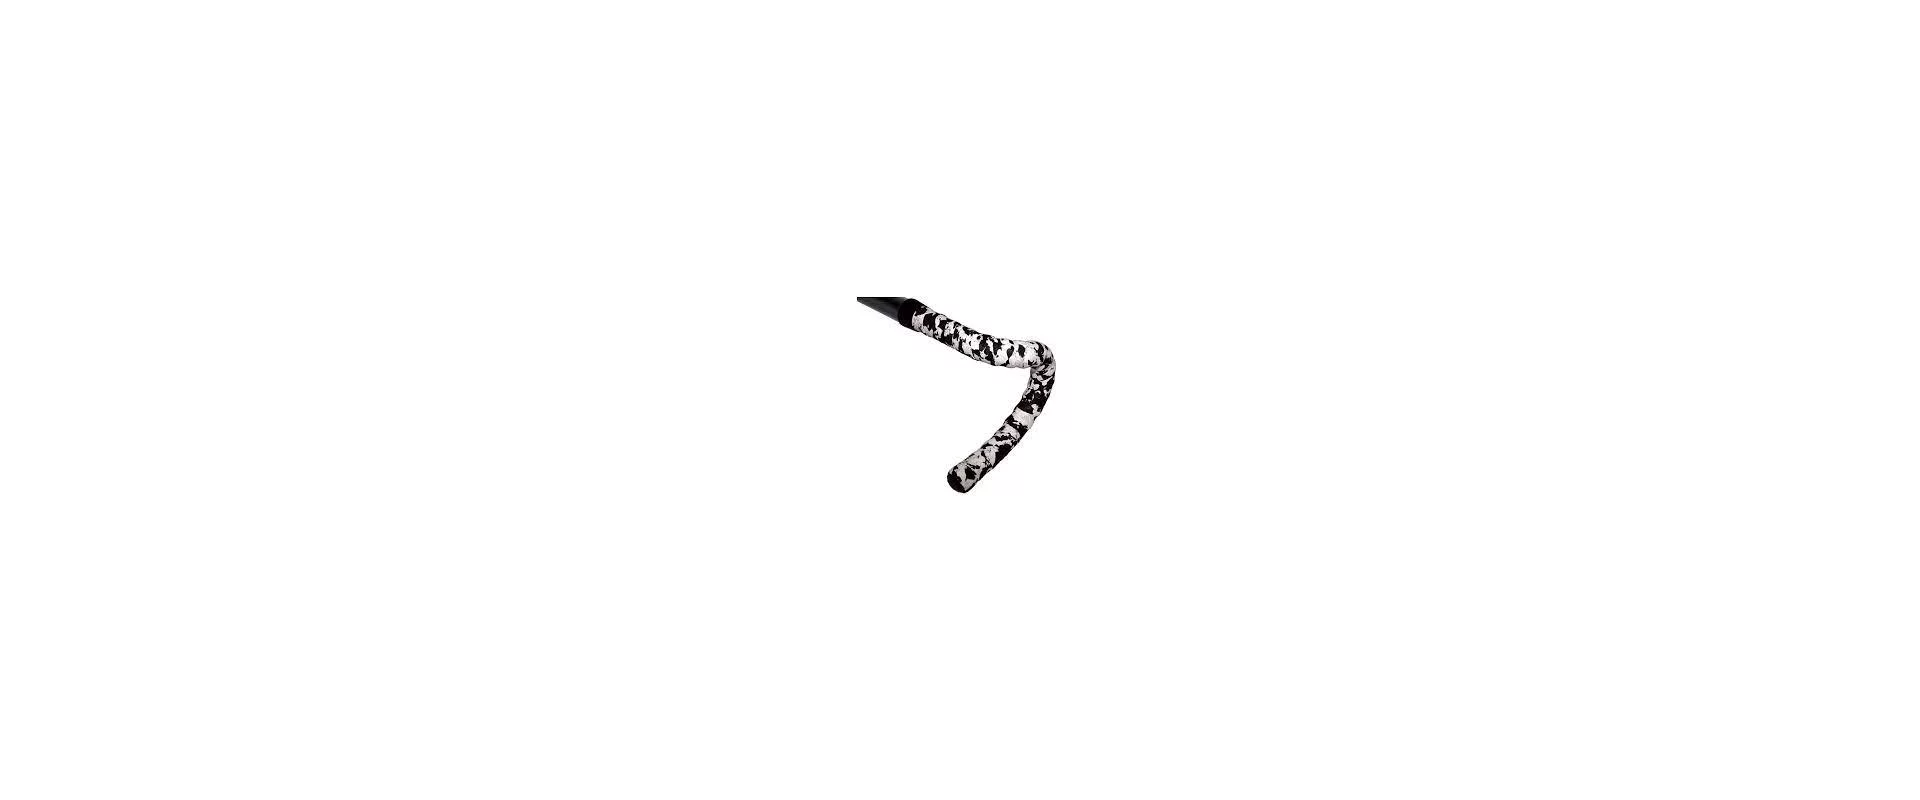 Cinelli Tape Cork Marco Splash White-Black / Обмотка руля пробковая